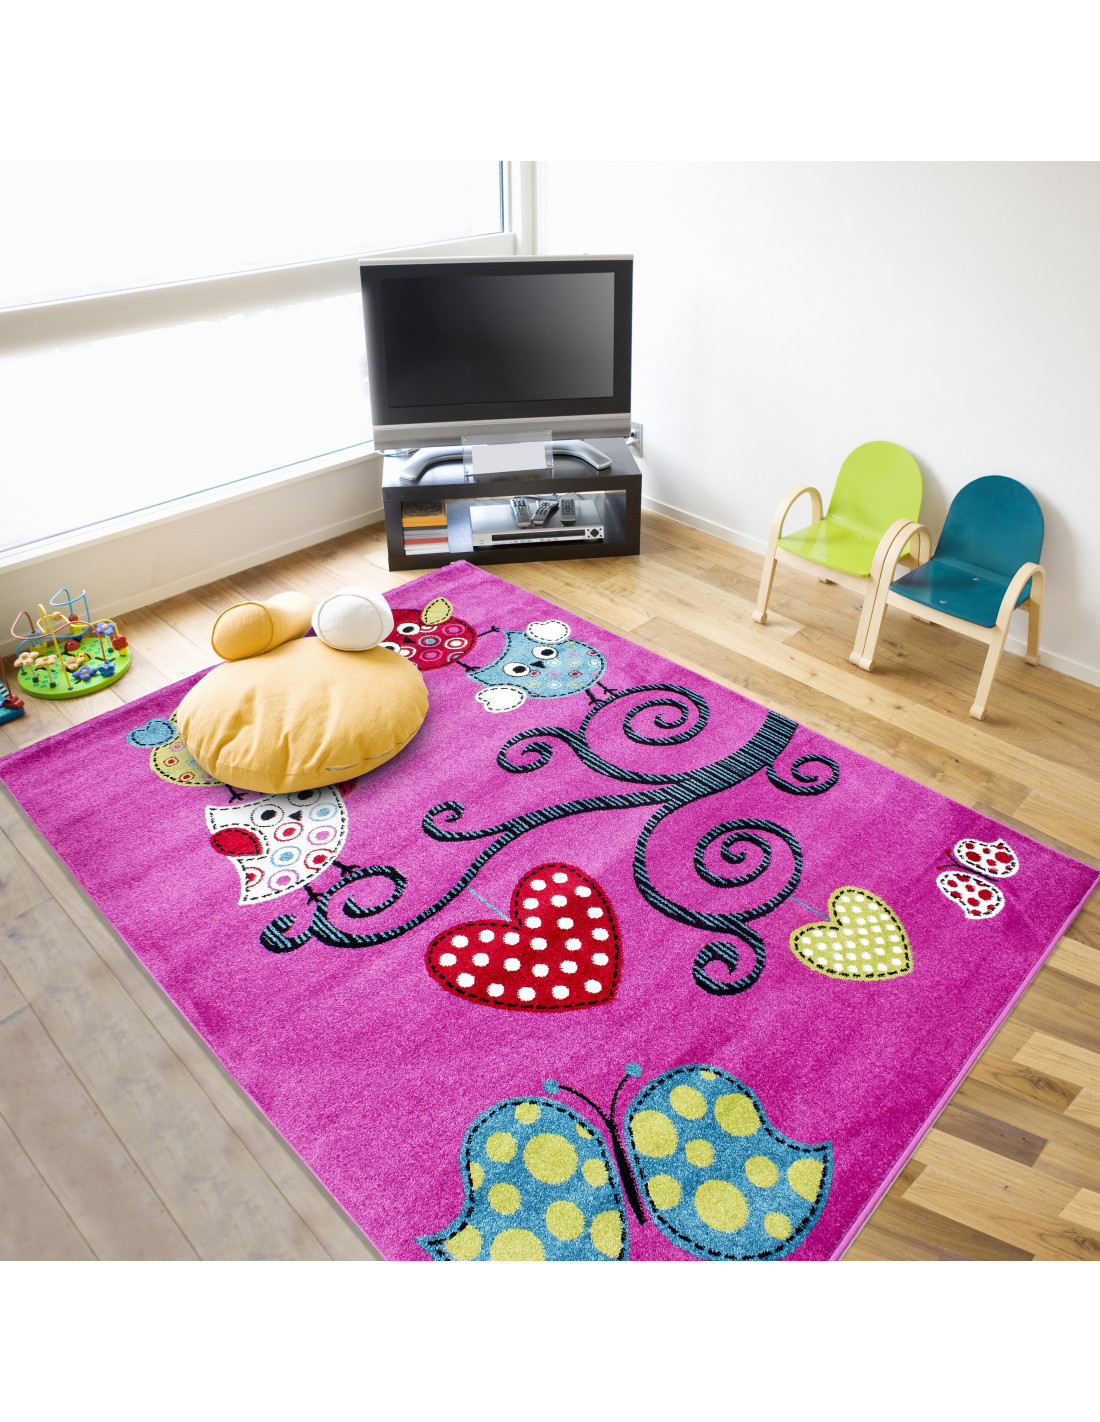 https://www.carpet1001.de/206-thickbox_default/alfombra-infantil-alfombra-para-habitacion-infantil-con-motivos-arbol-mariposa-ninos-0420-violeta.jpg